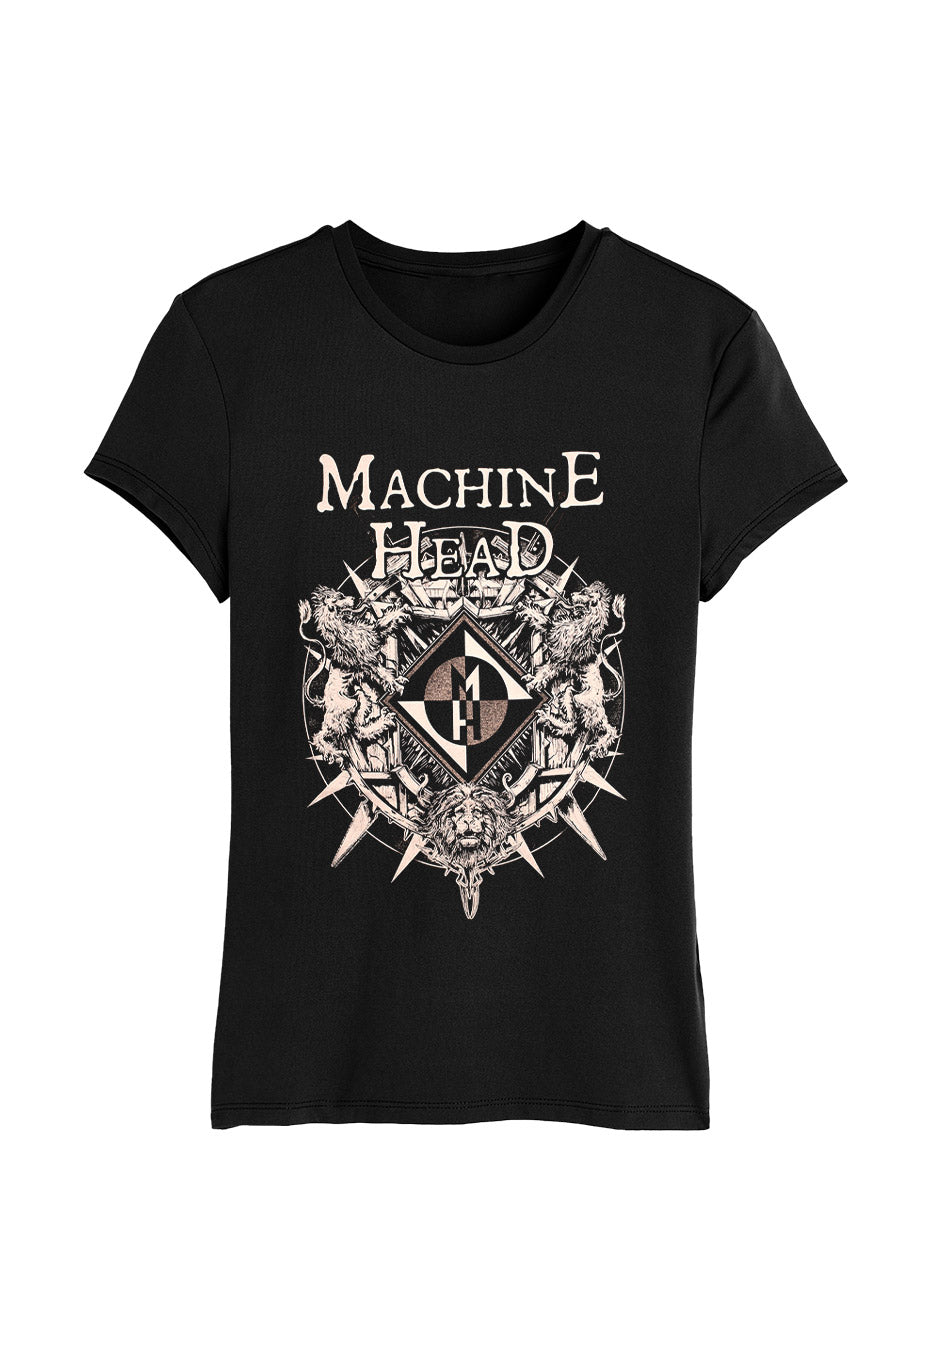 Machine Head - Bloodstone - Girly